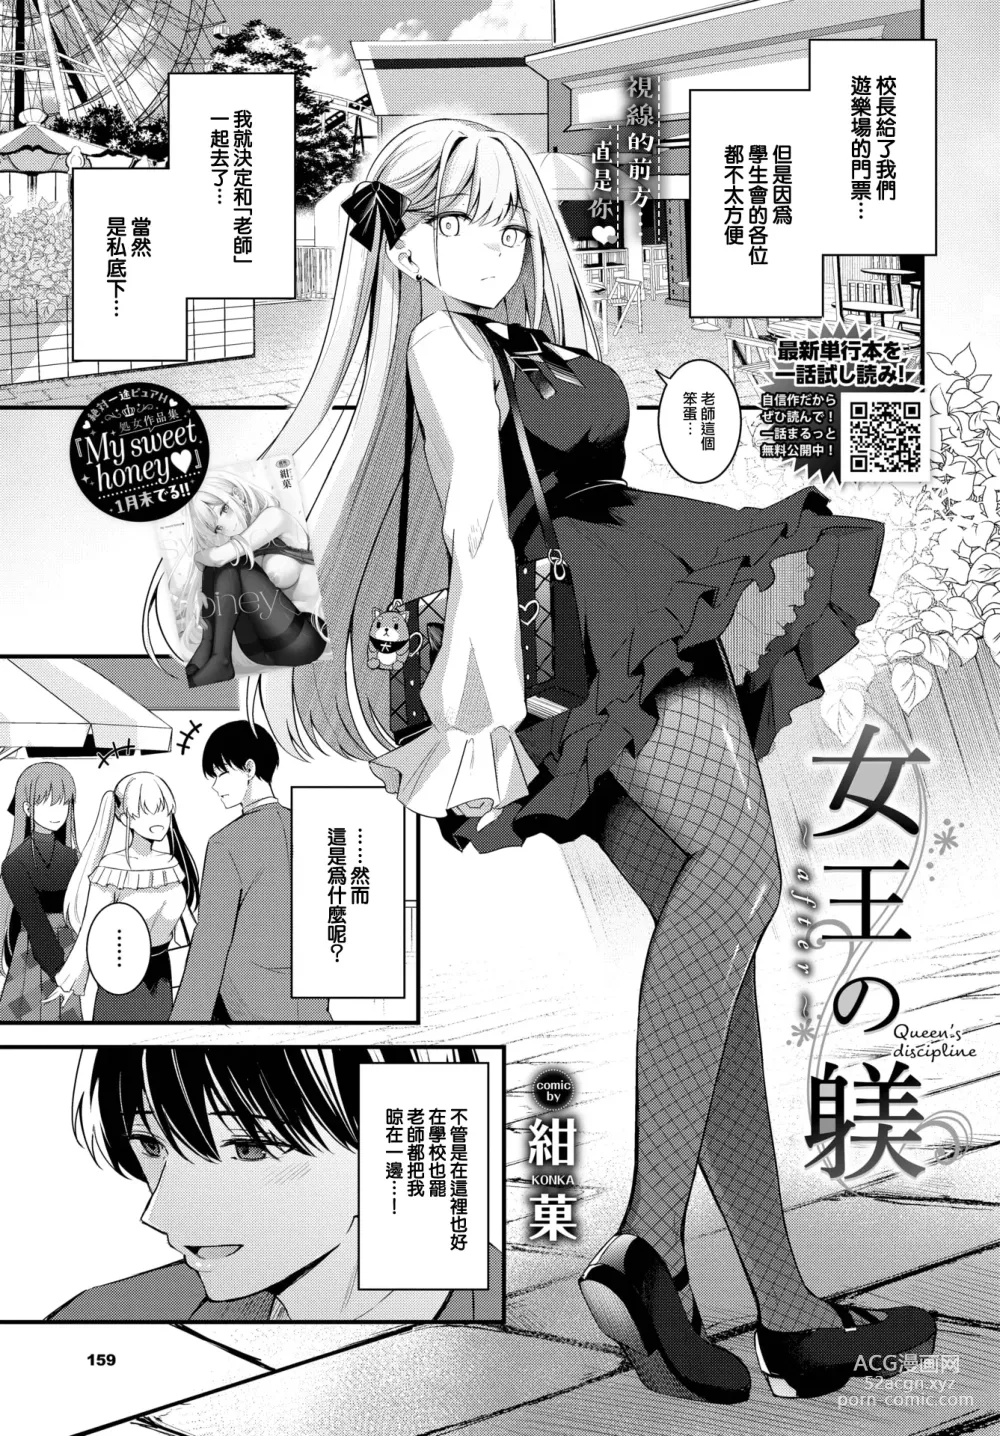 Page 2 of manga Joou no Shitsuke - Queens discipline ~after~